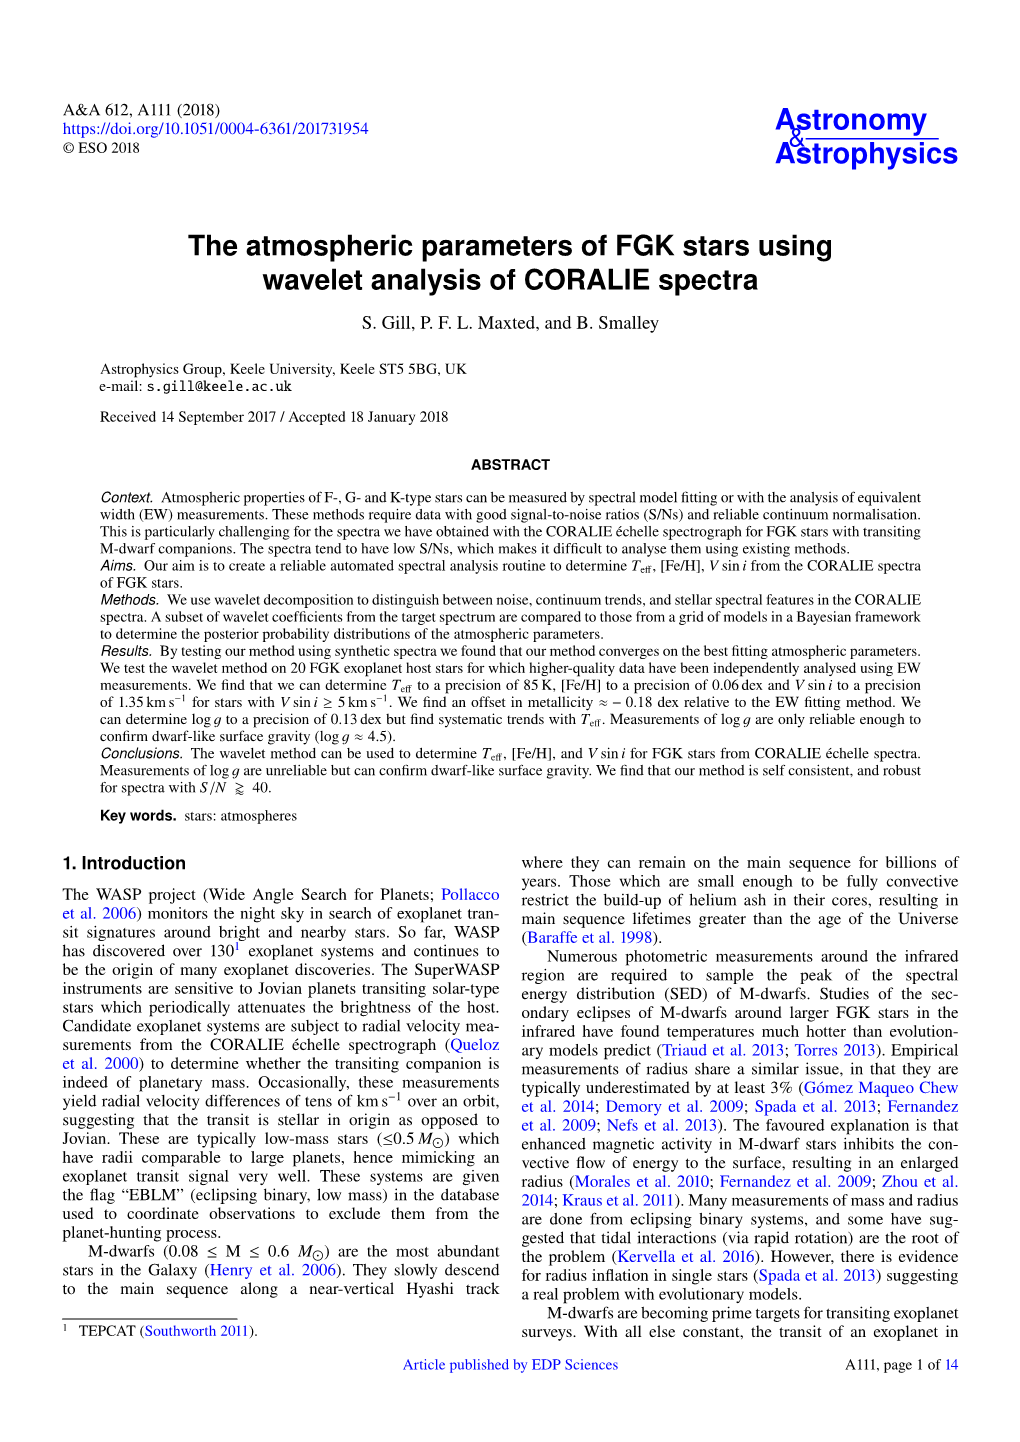 The Atmospheric Parameters of FGK Stars Using Wavelet Analysis of CORALIE Spectra S